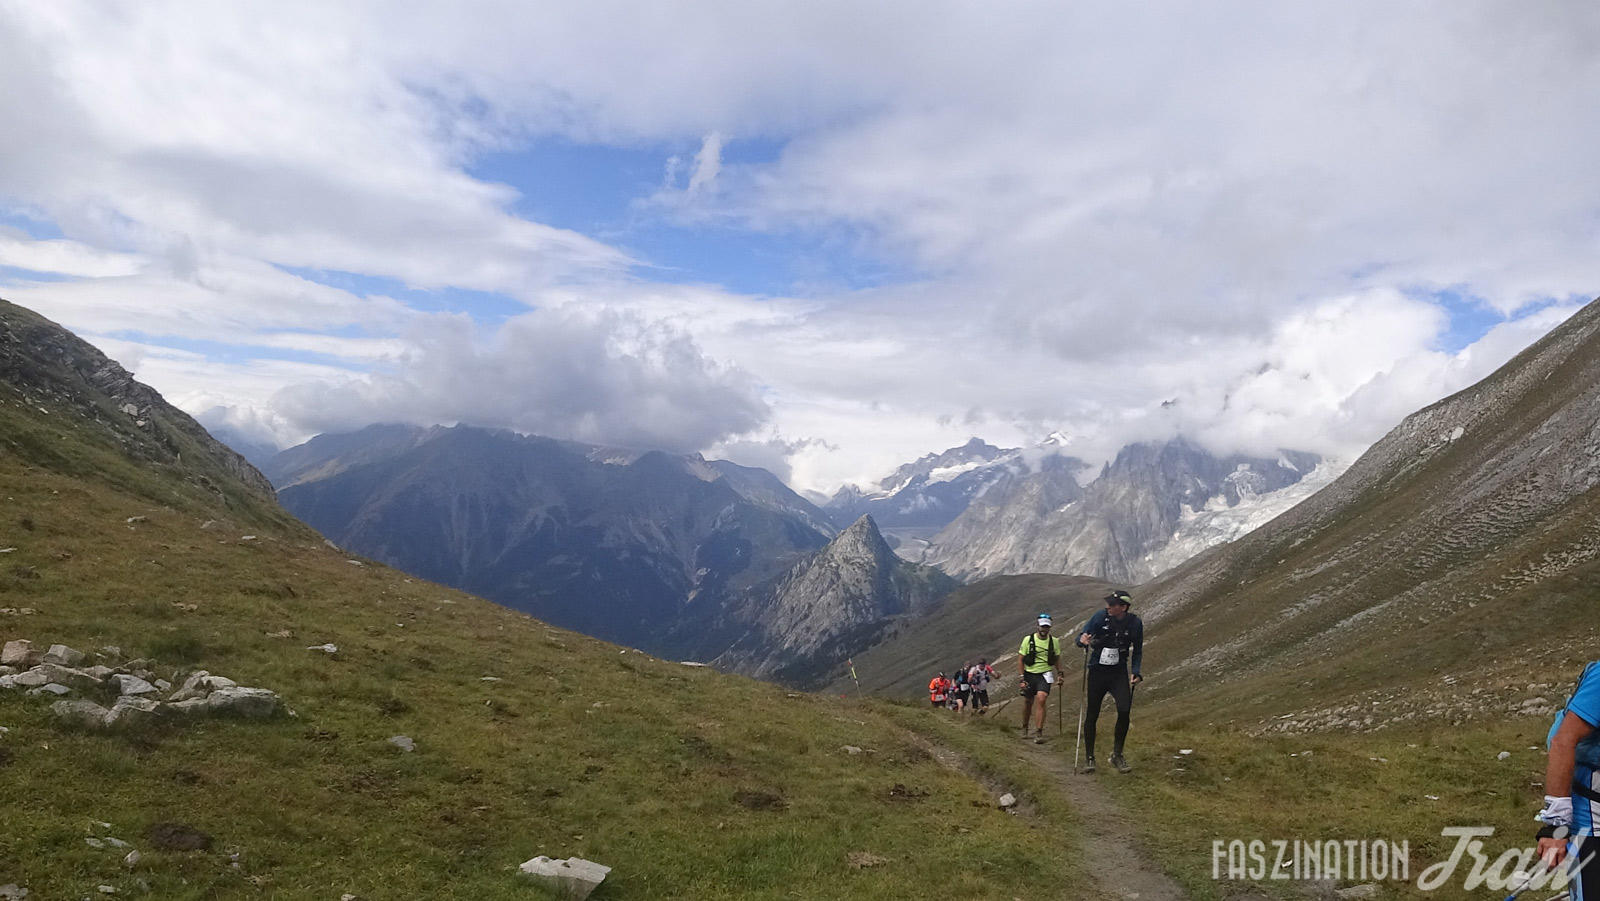 Utmb Ccc 2018 Ultra Trail Running Am Mont Blanc